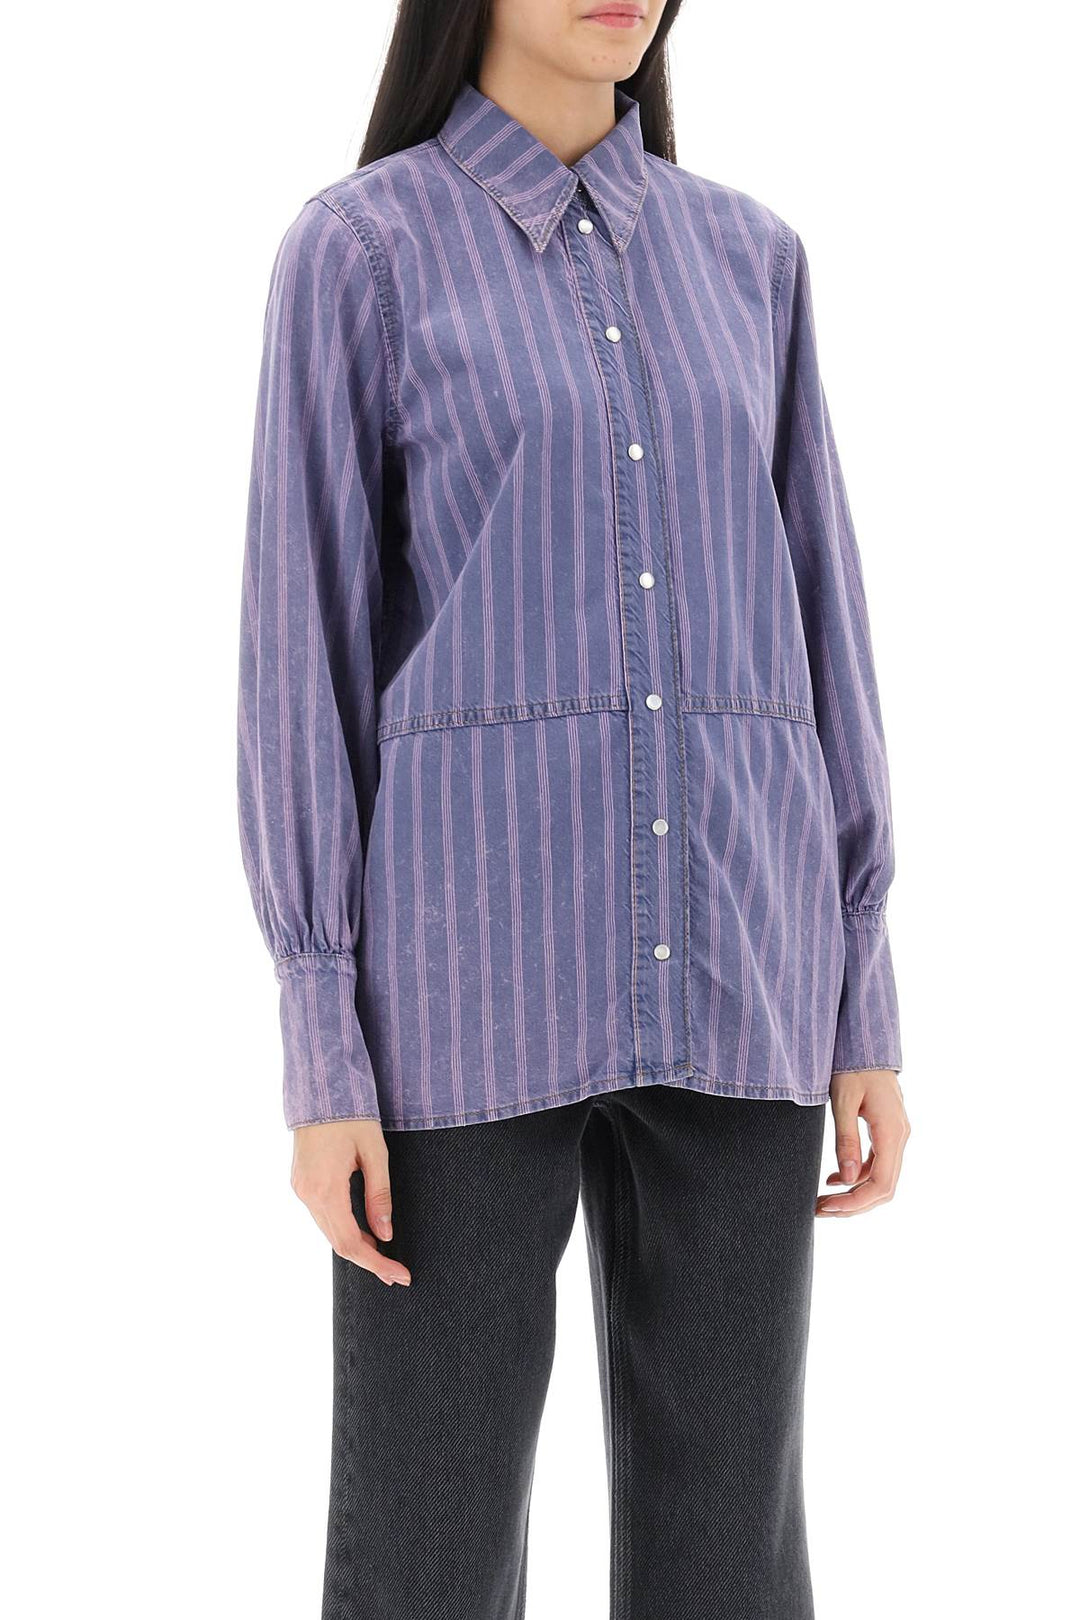 Ganni Striped Denim Shirt   Viola